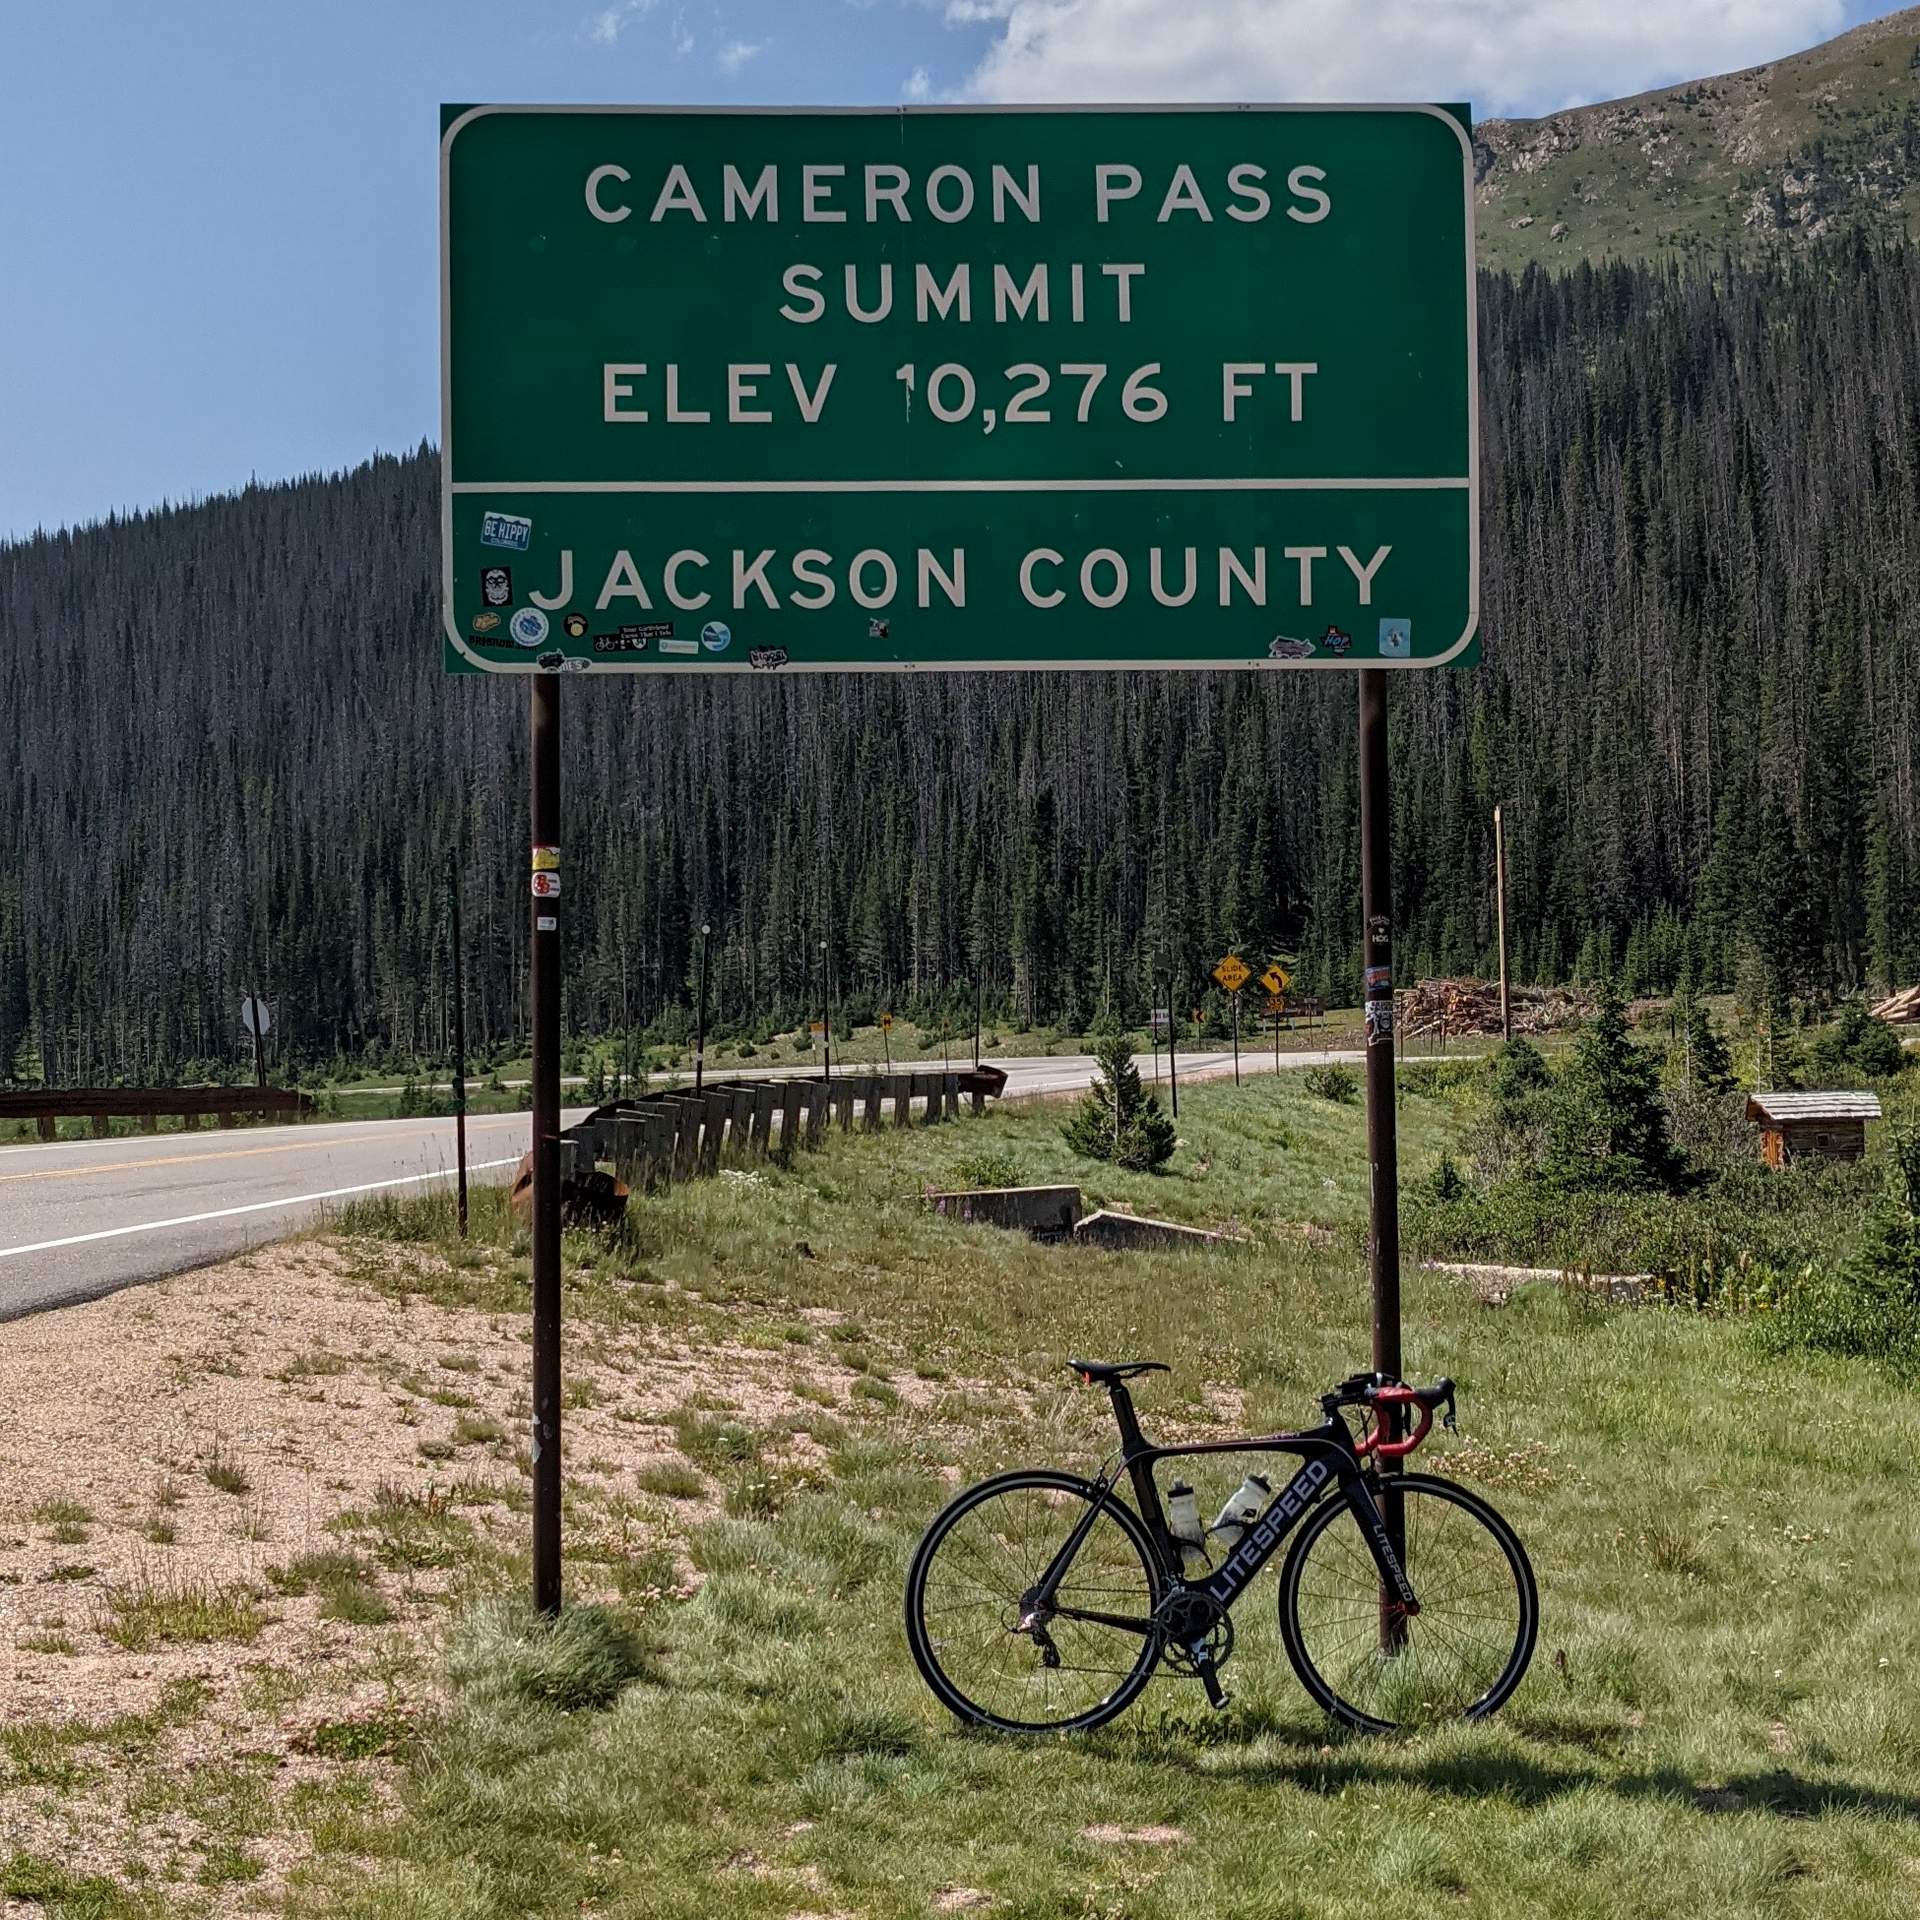 black Litespeed Archon C2, "Cameron Pass Summit Elev 10276 ft" sign